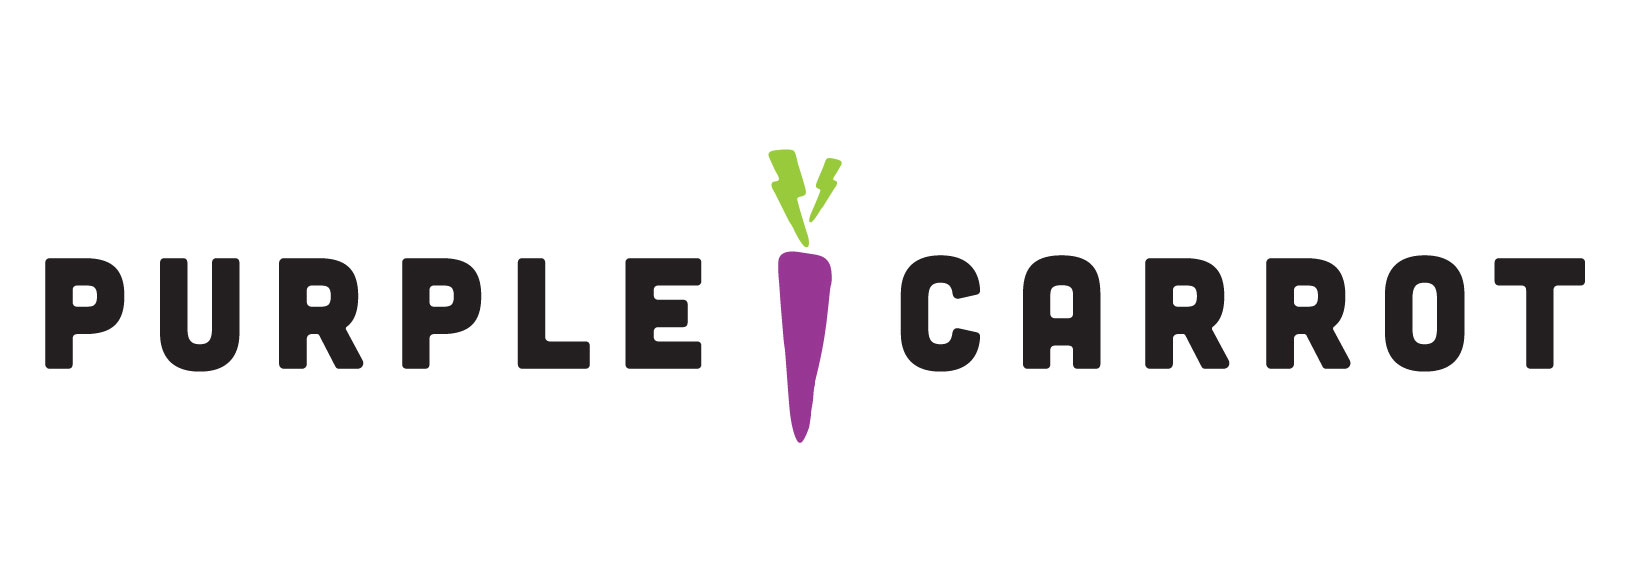 purple-carrot-logo.jpg